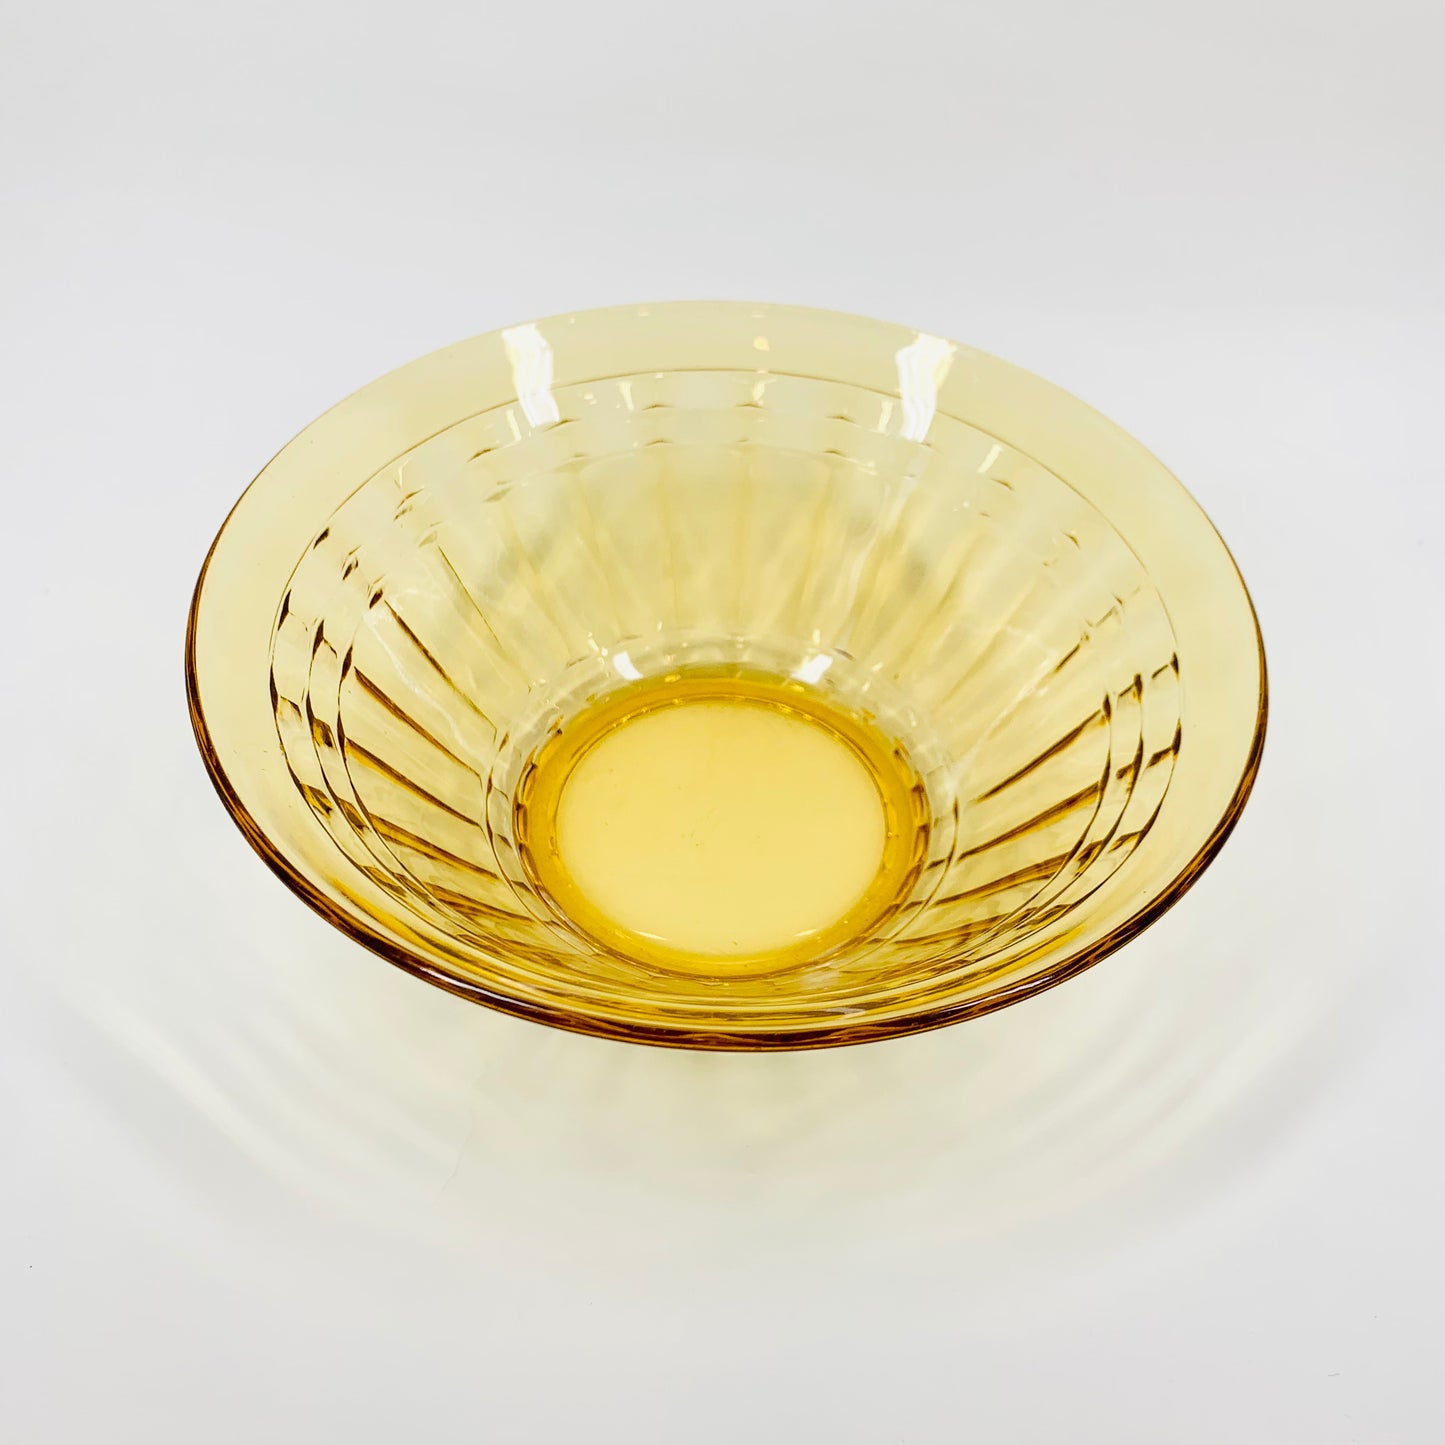 Antique Art Deco pressed amber glass salad/fruit bowl